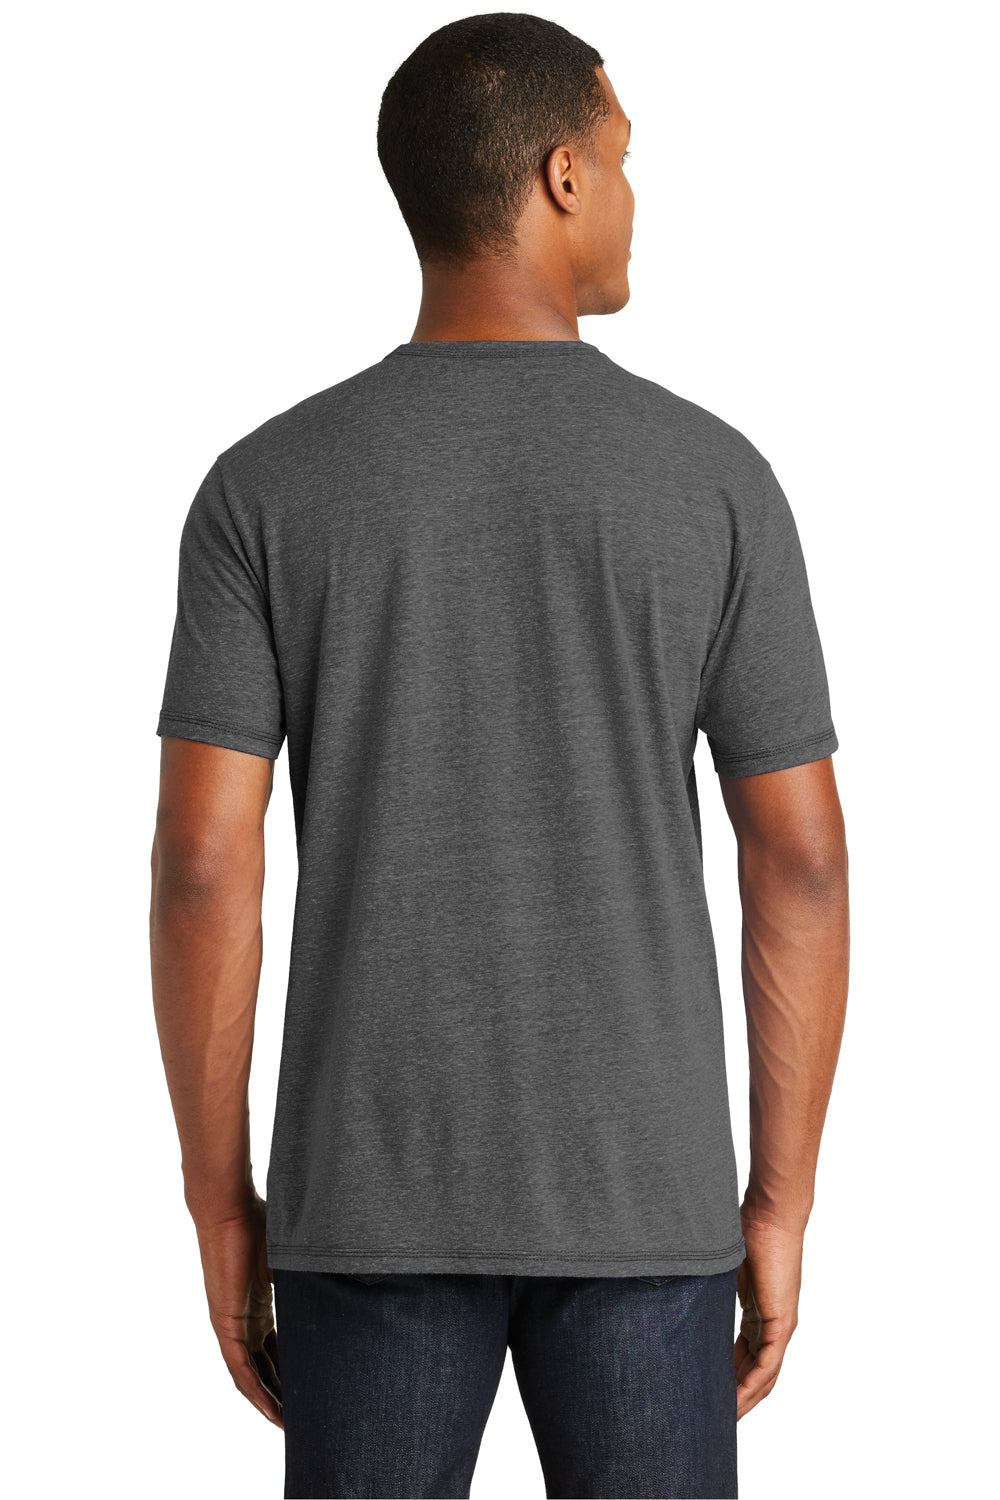 New Era NEA130 Mens Performance Moisture Wicking Short Sleeve Crewneck T-Shirt Dark Graphite Grey Back